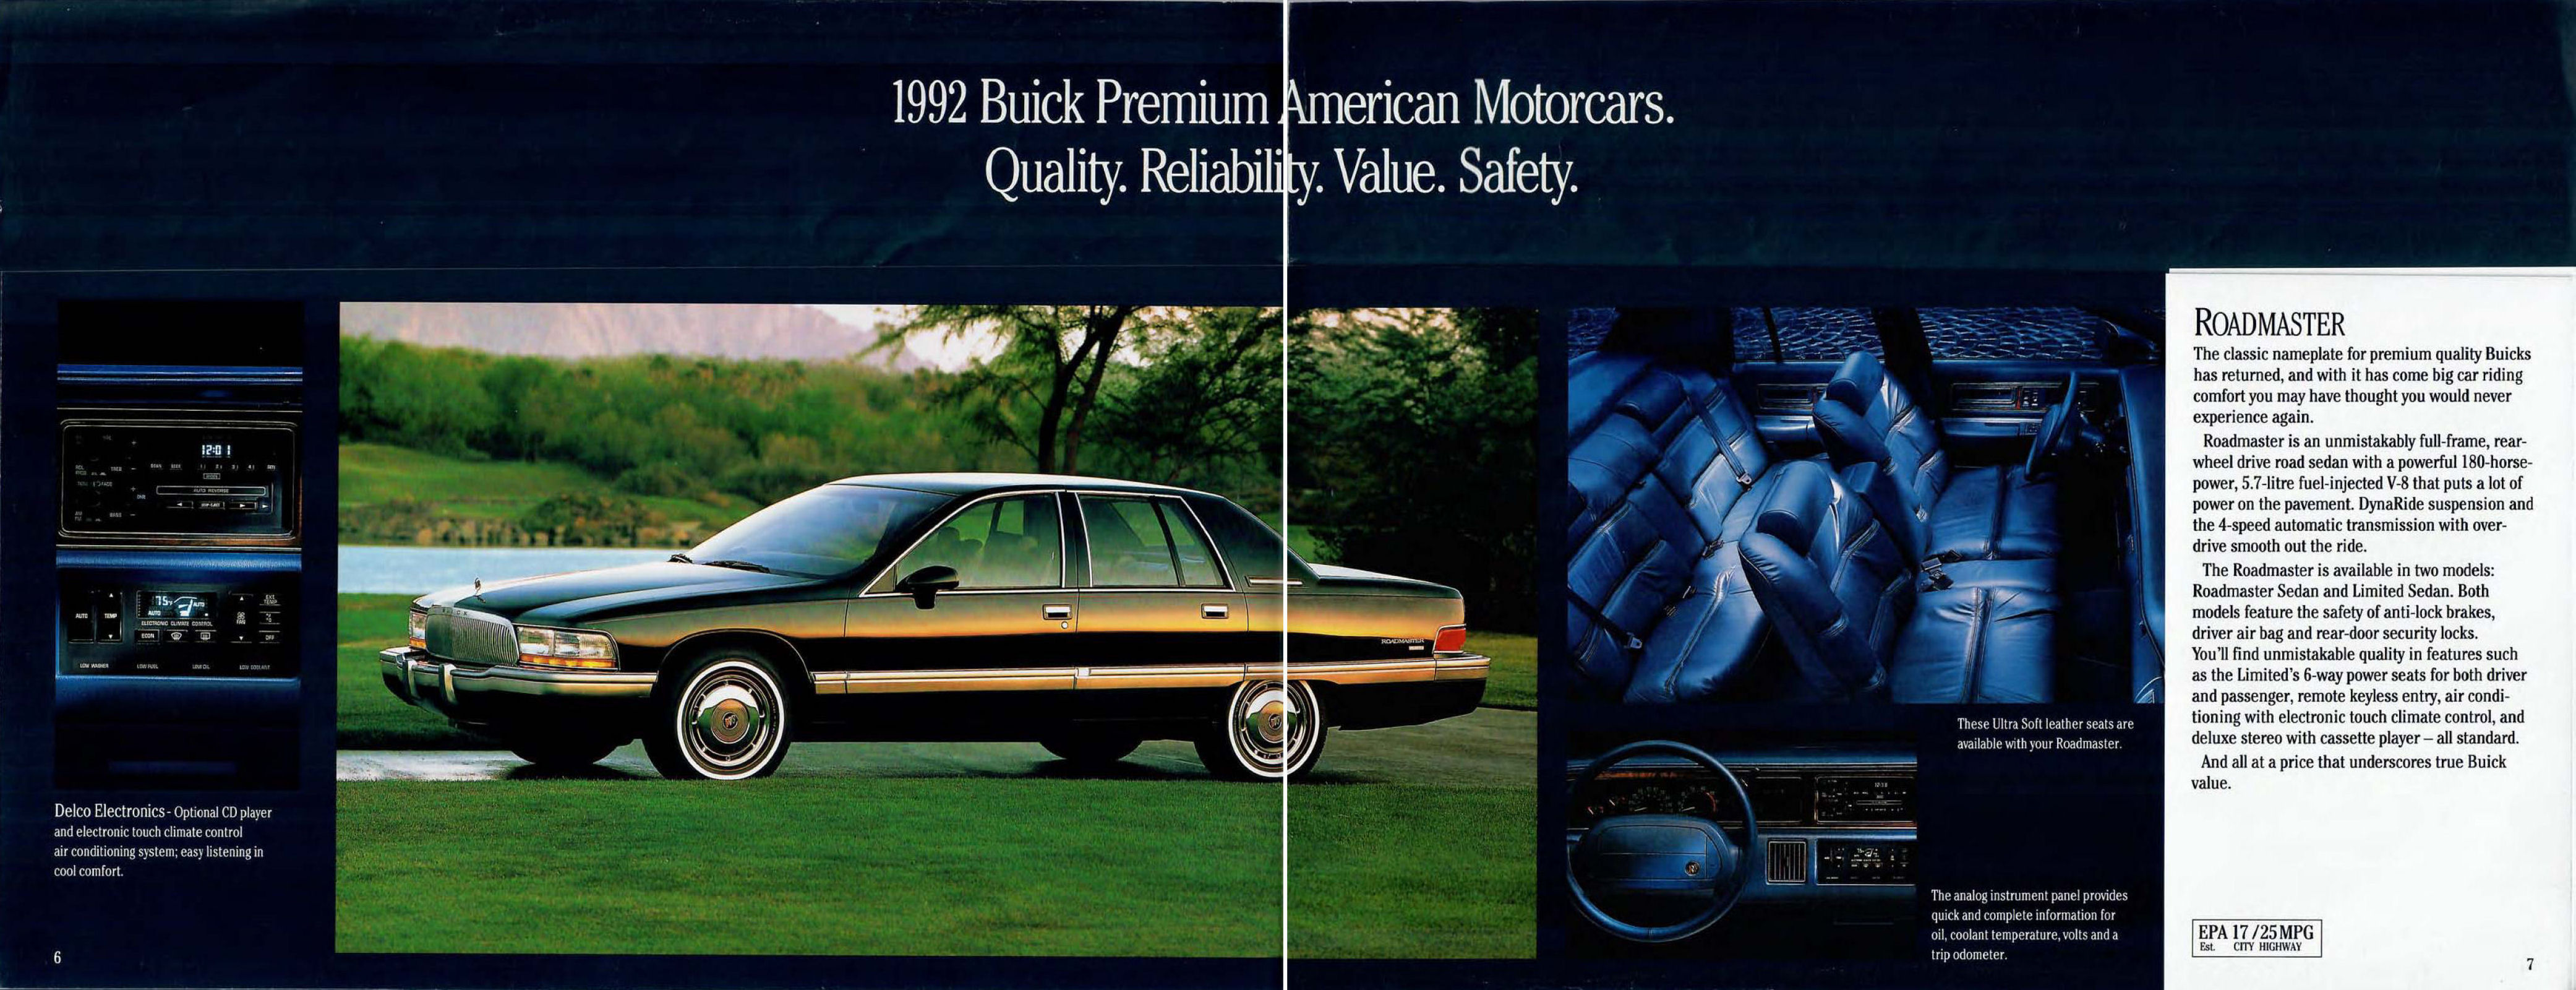 1992 Buick Full Line Handout-06-07